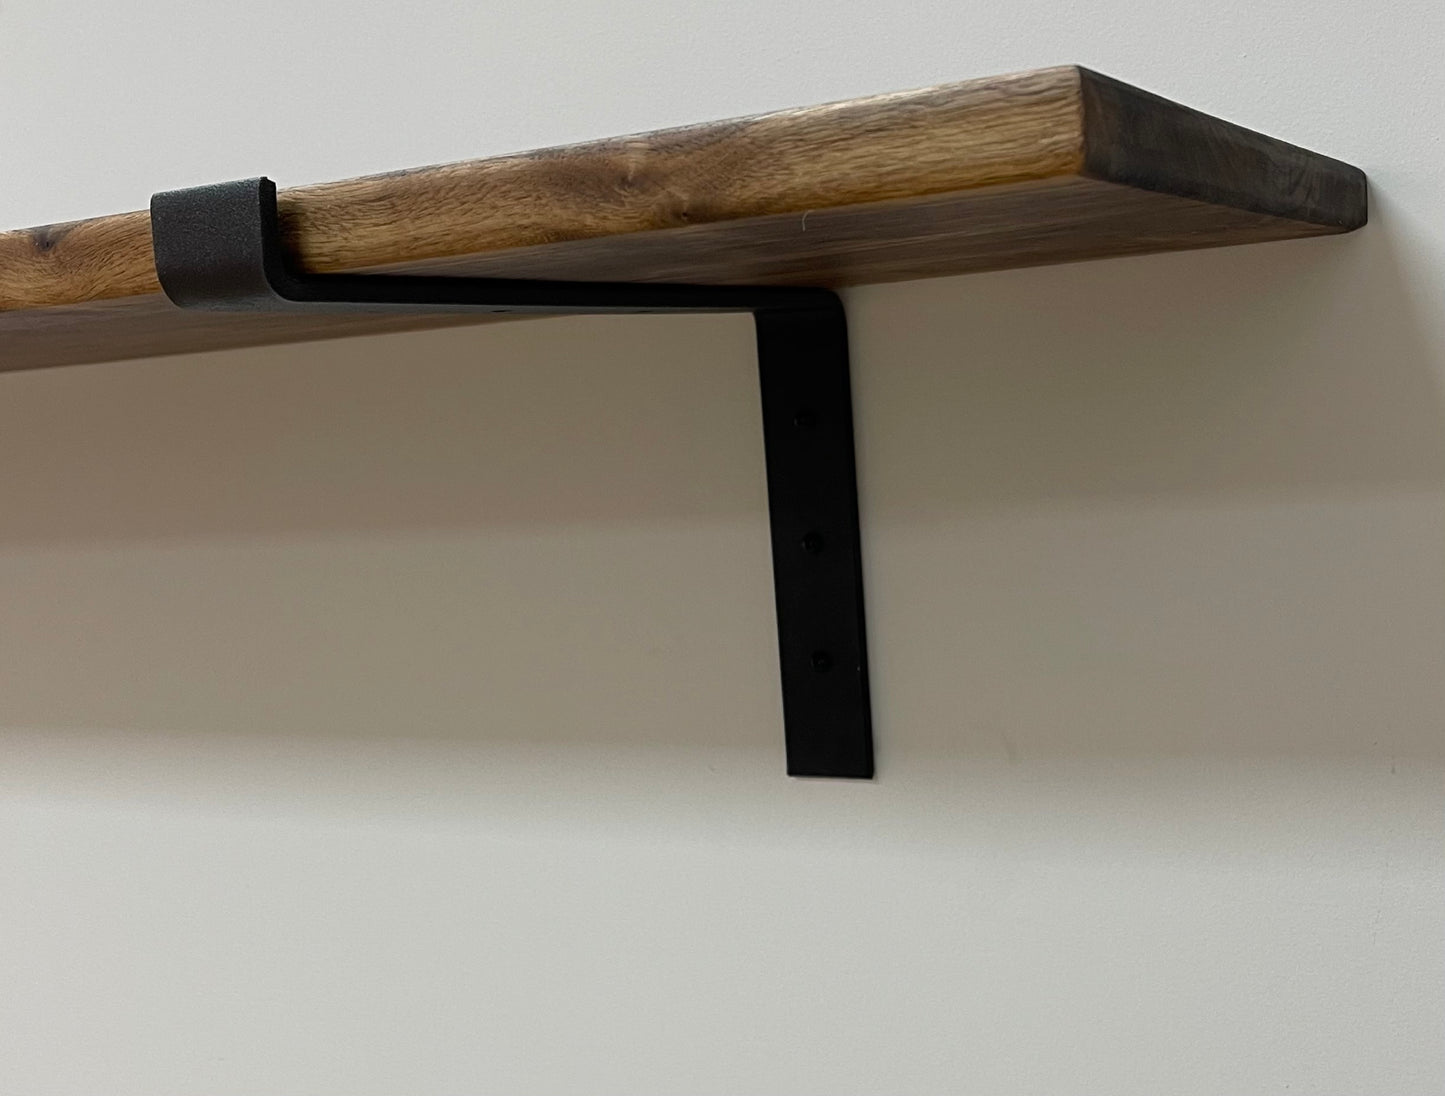 Premium American Black Walnut Industrial Style Shelf with Lipped Down Brackets, 20-25mm (1 Inch) Depth